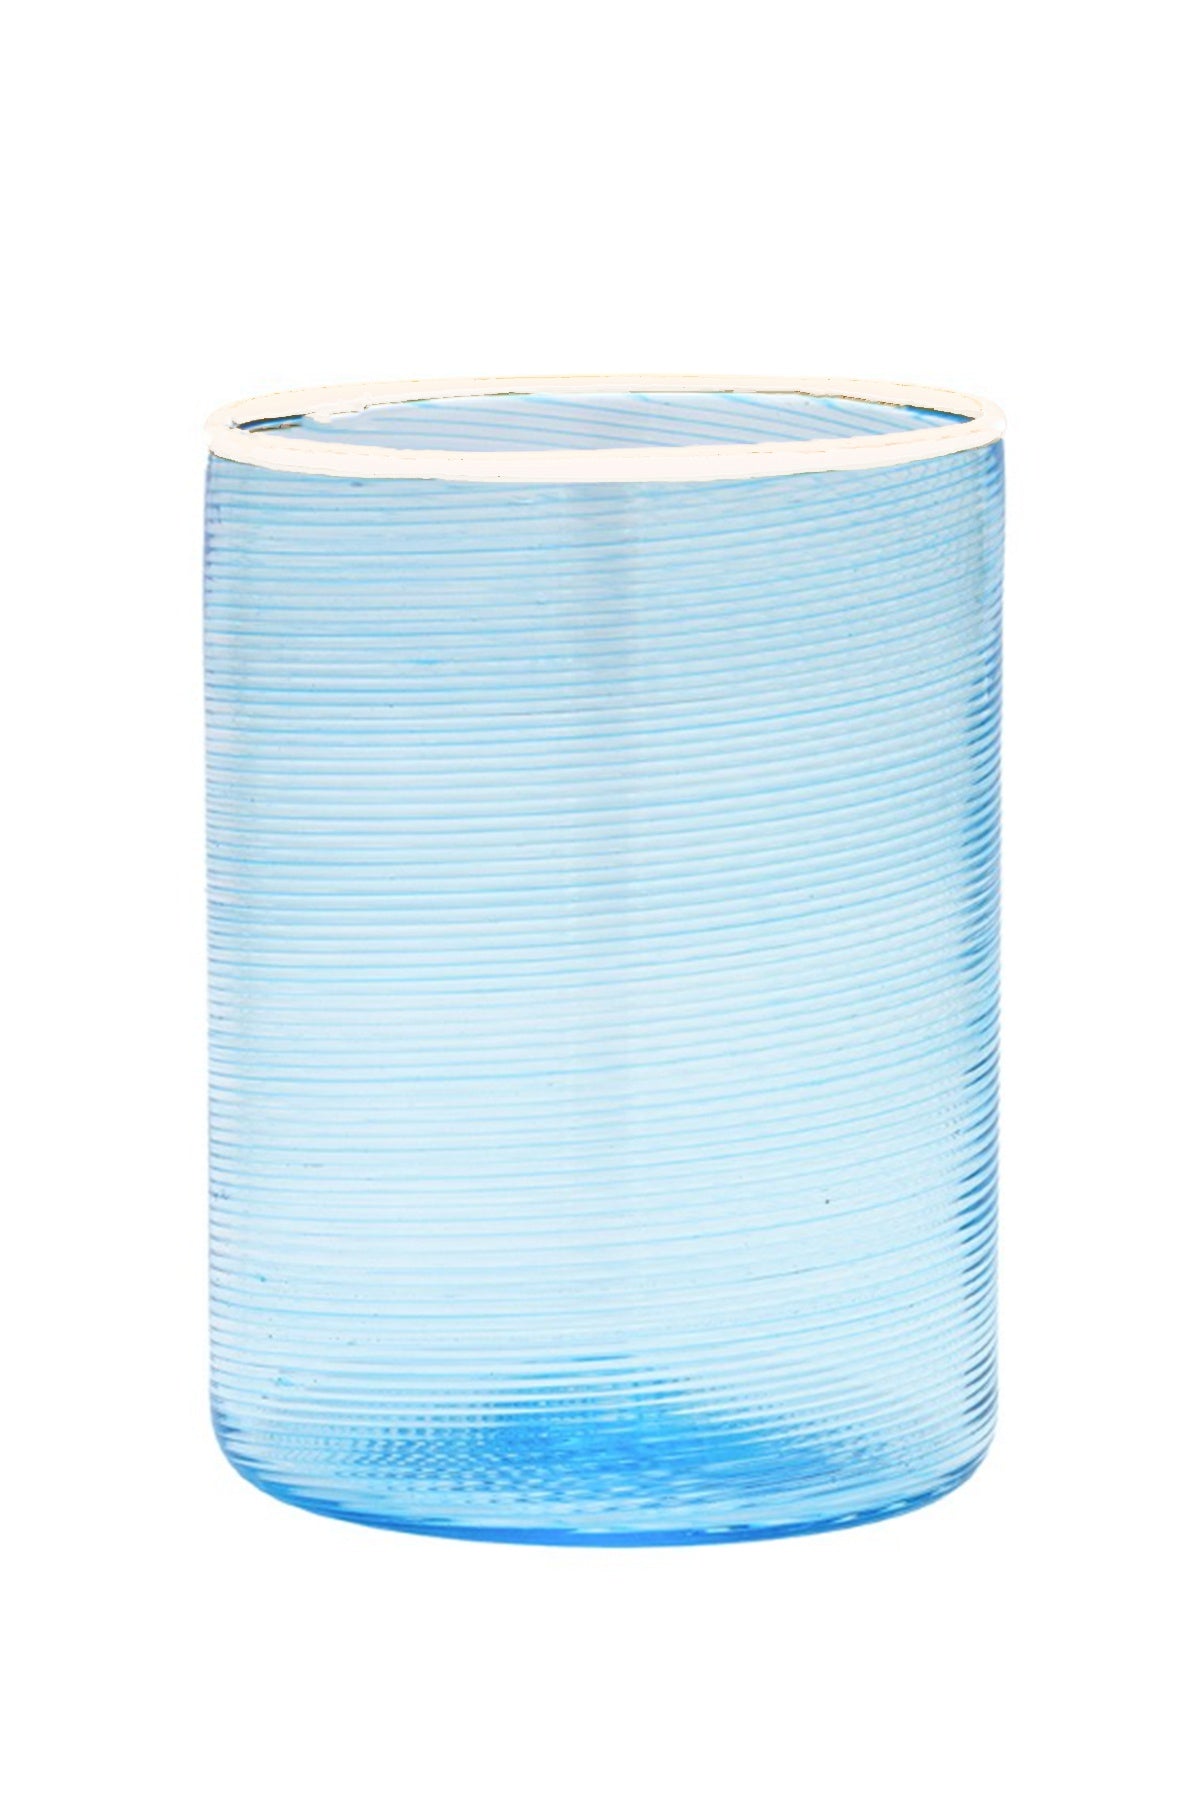 Fizzy Glass - Blue & White rim